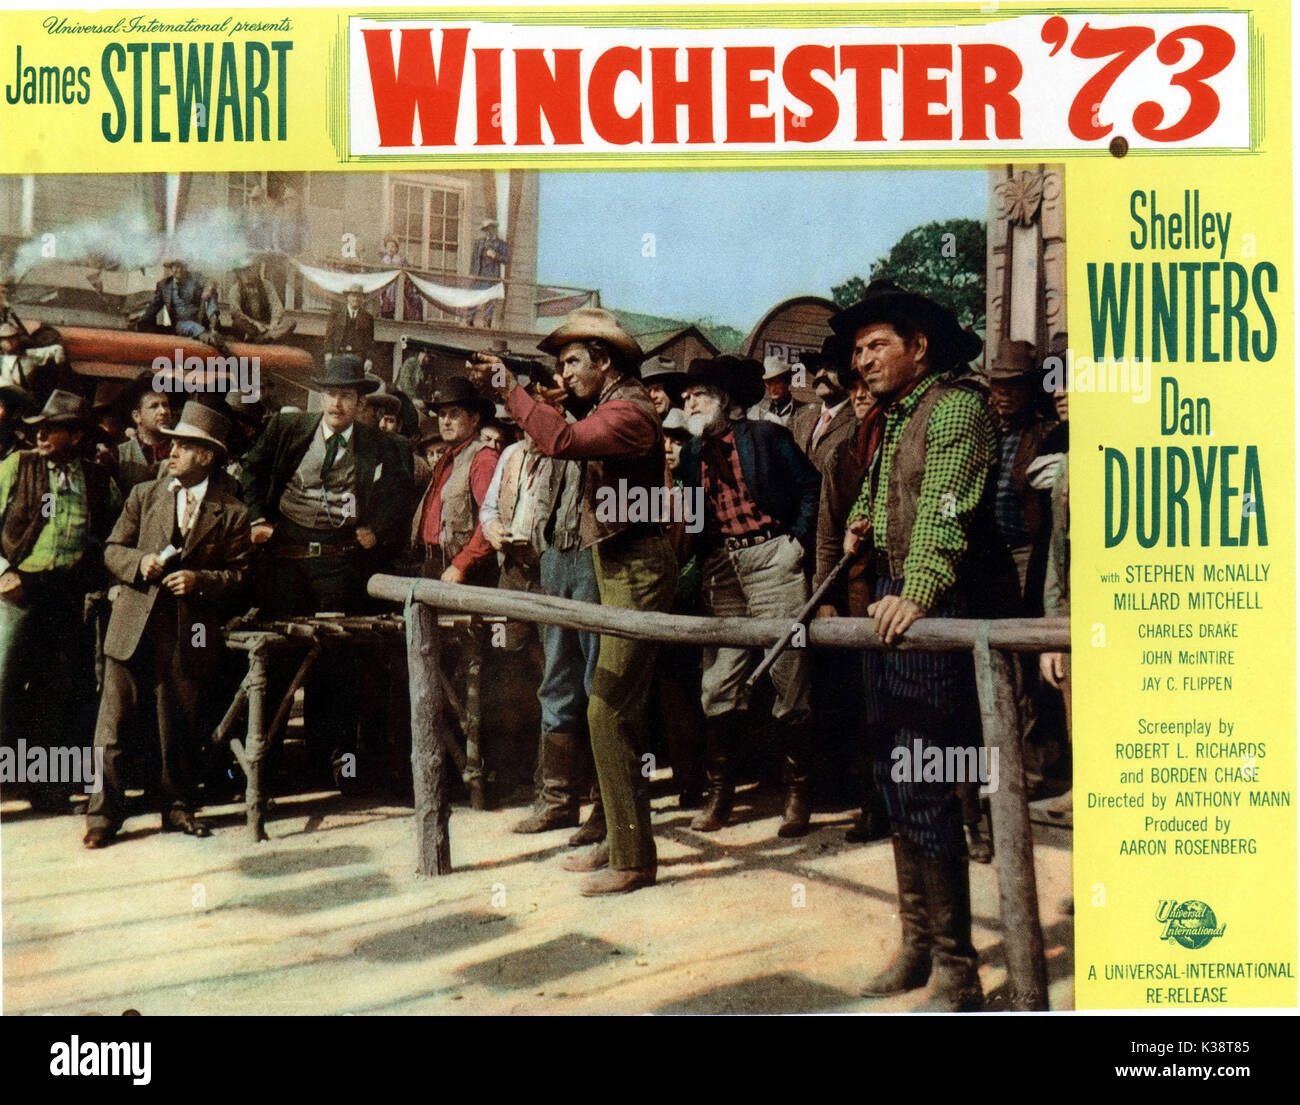 WINCHESTER '73 [US 1950]  JAMES STEWART, STEPHEN MCNALLY     Date: 1950 Stock Photo